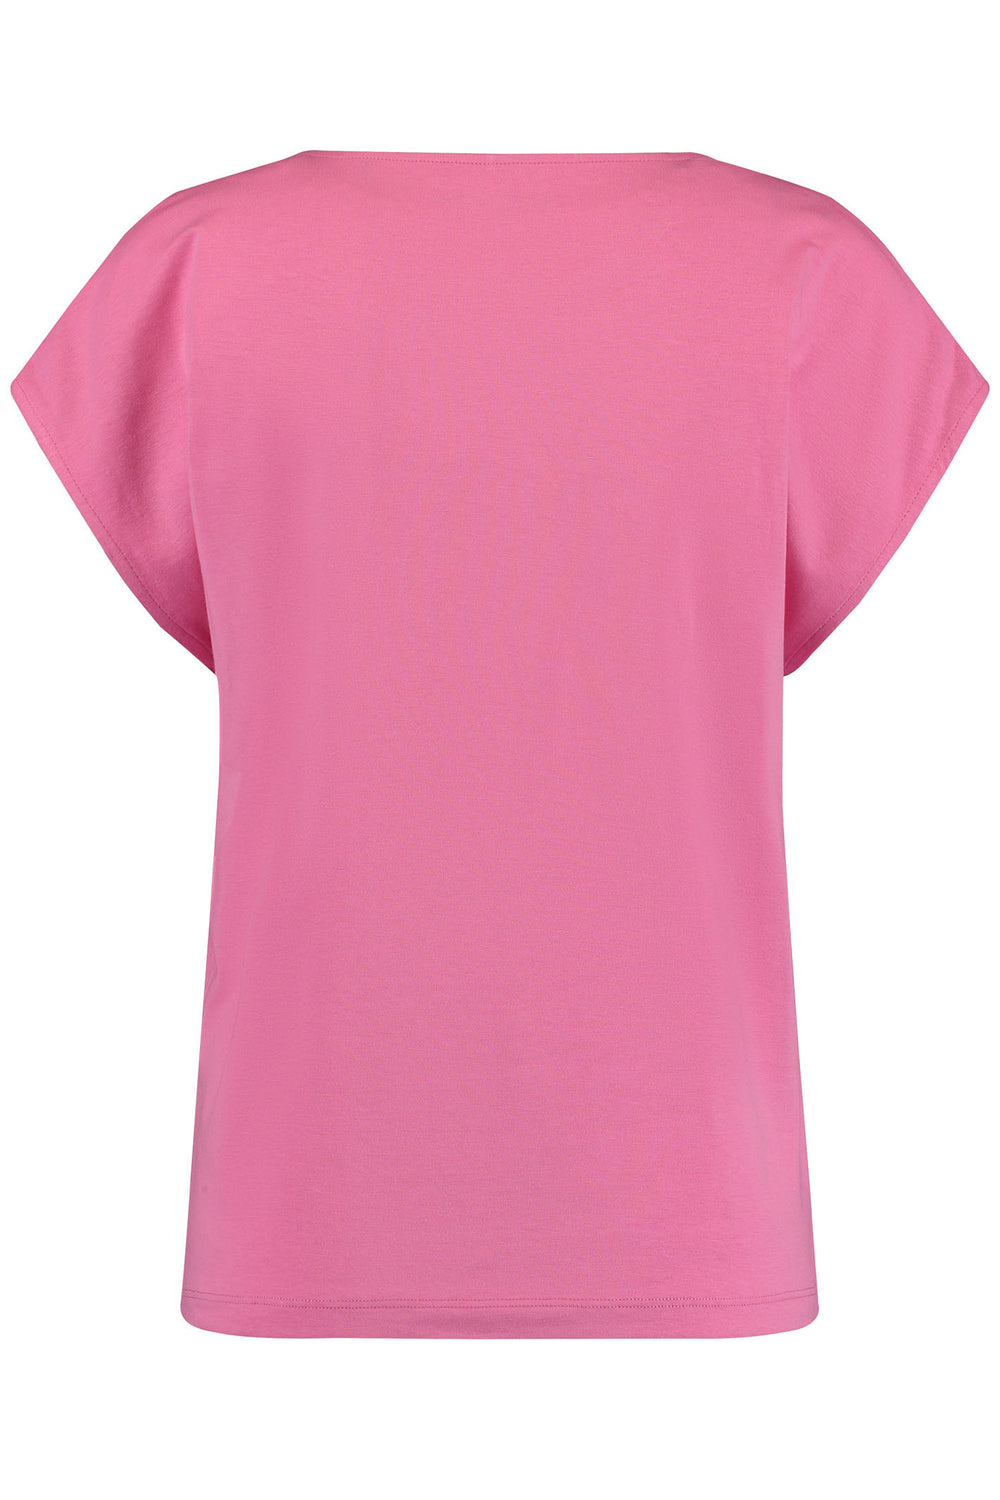 Gerry Webber 270043 Bubblegum Pink Top - Experience Boutique